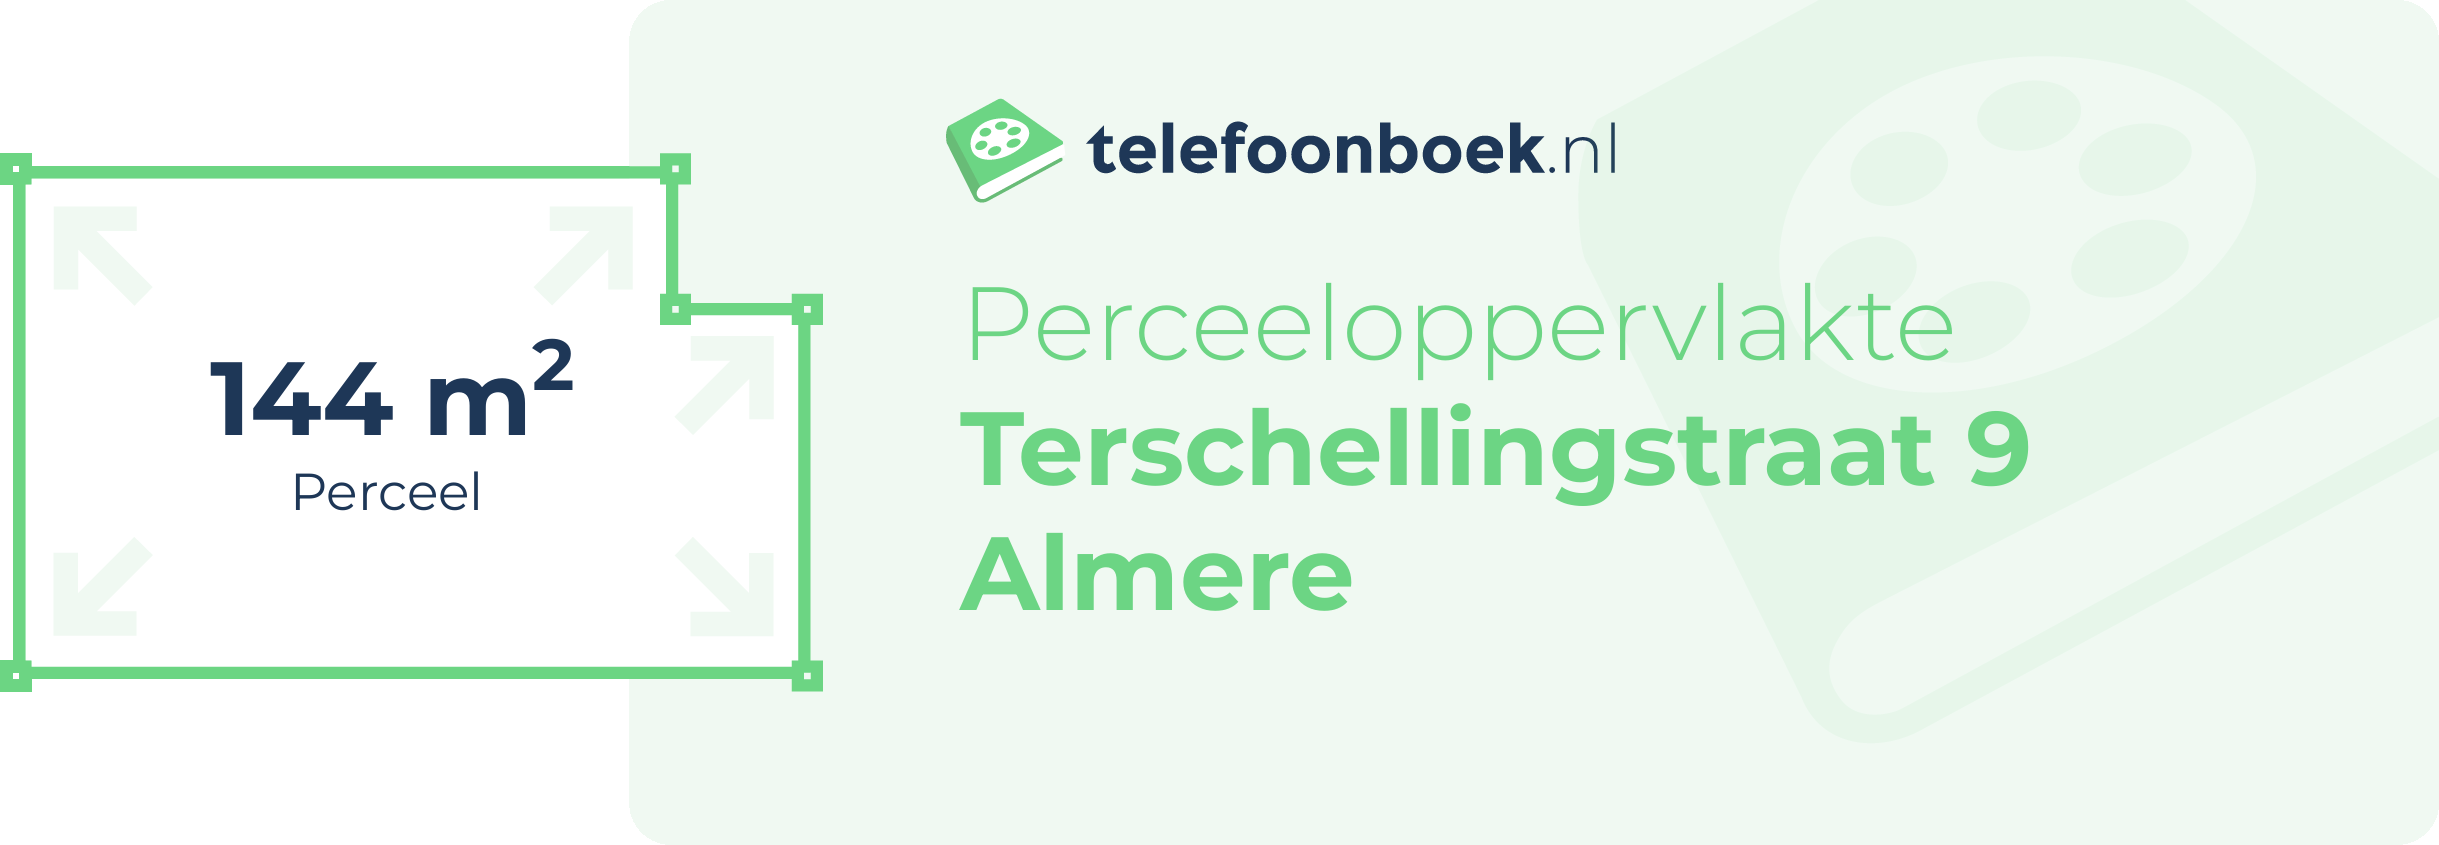 Perceeloppervlakte Terschellingstraat 9 Almere